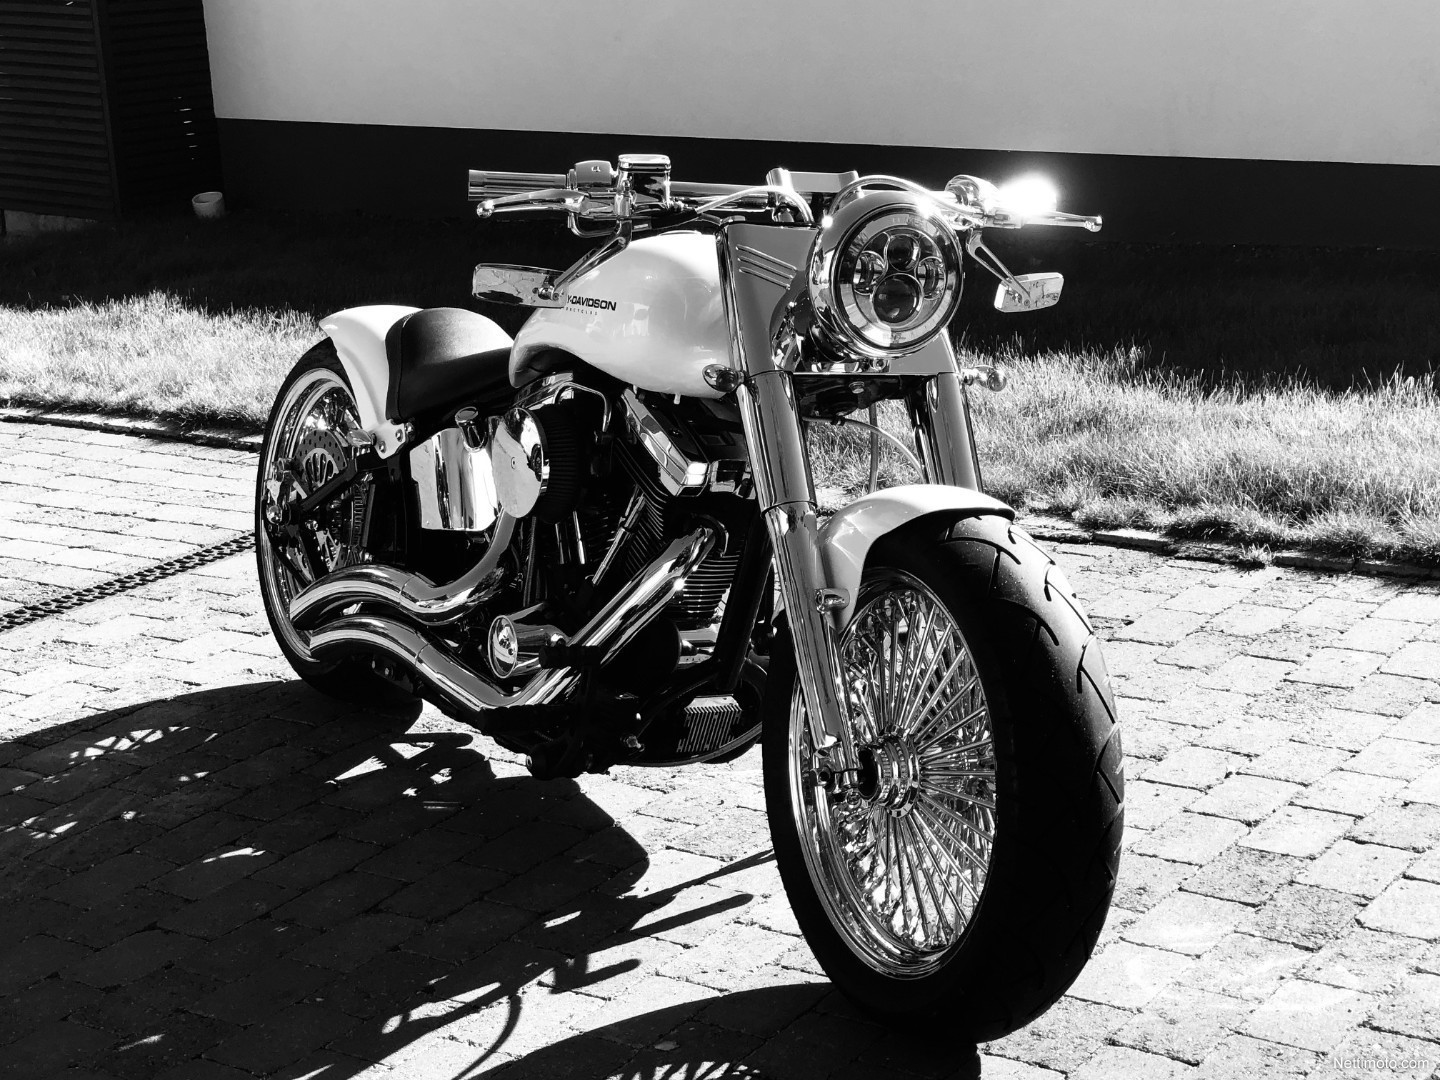  Harley Davidson Softail FLSTF Fat Boy 1 400 cm 2019 